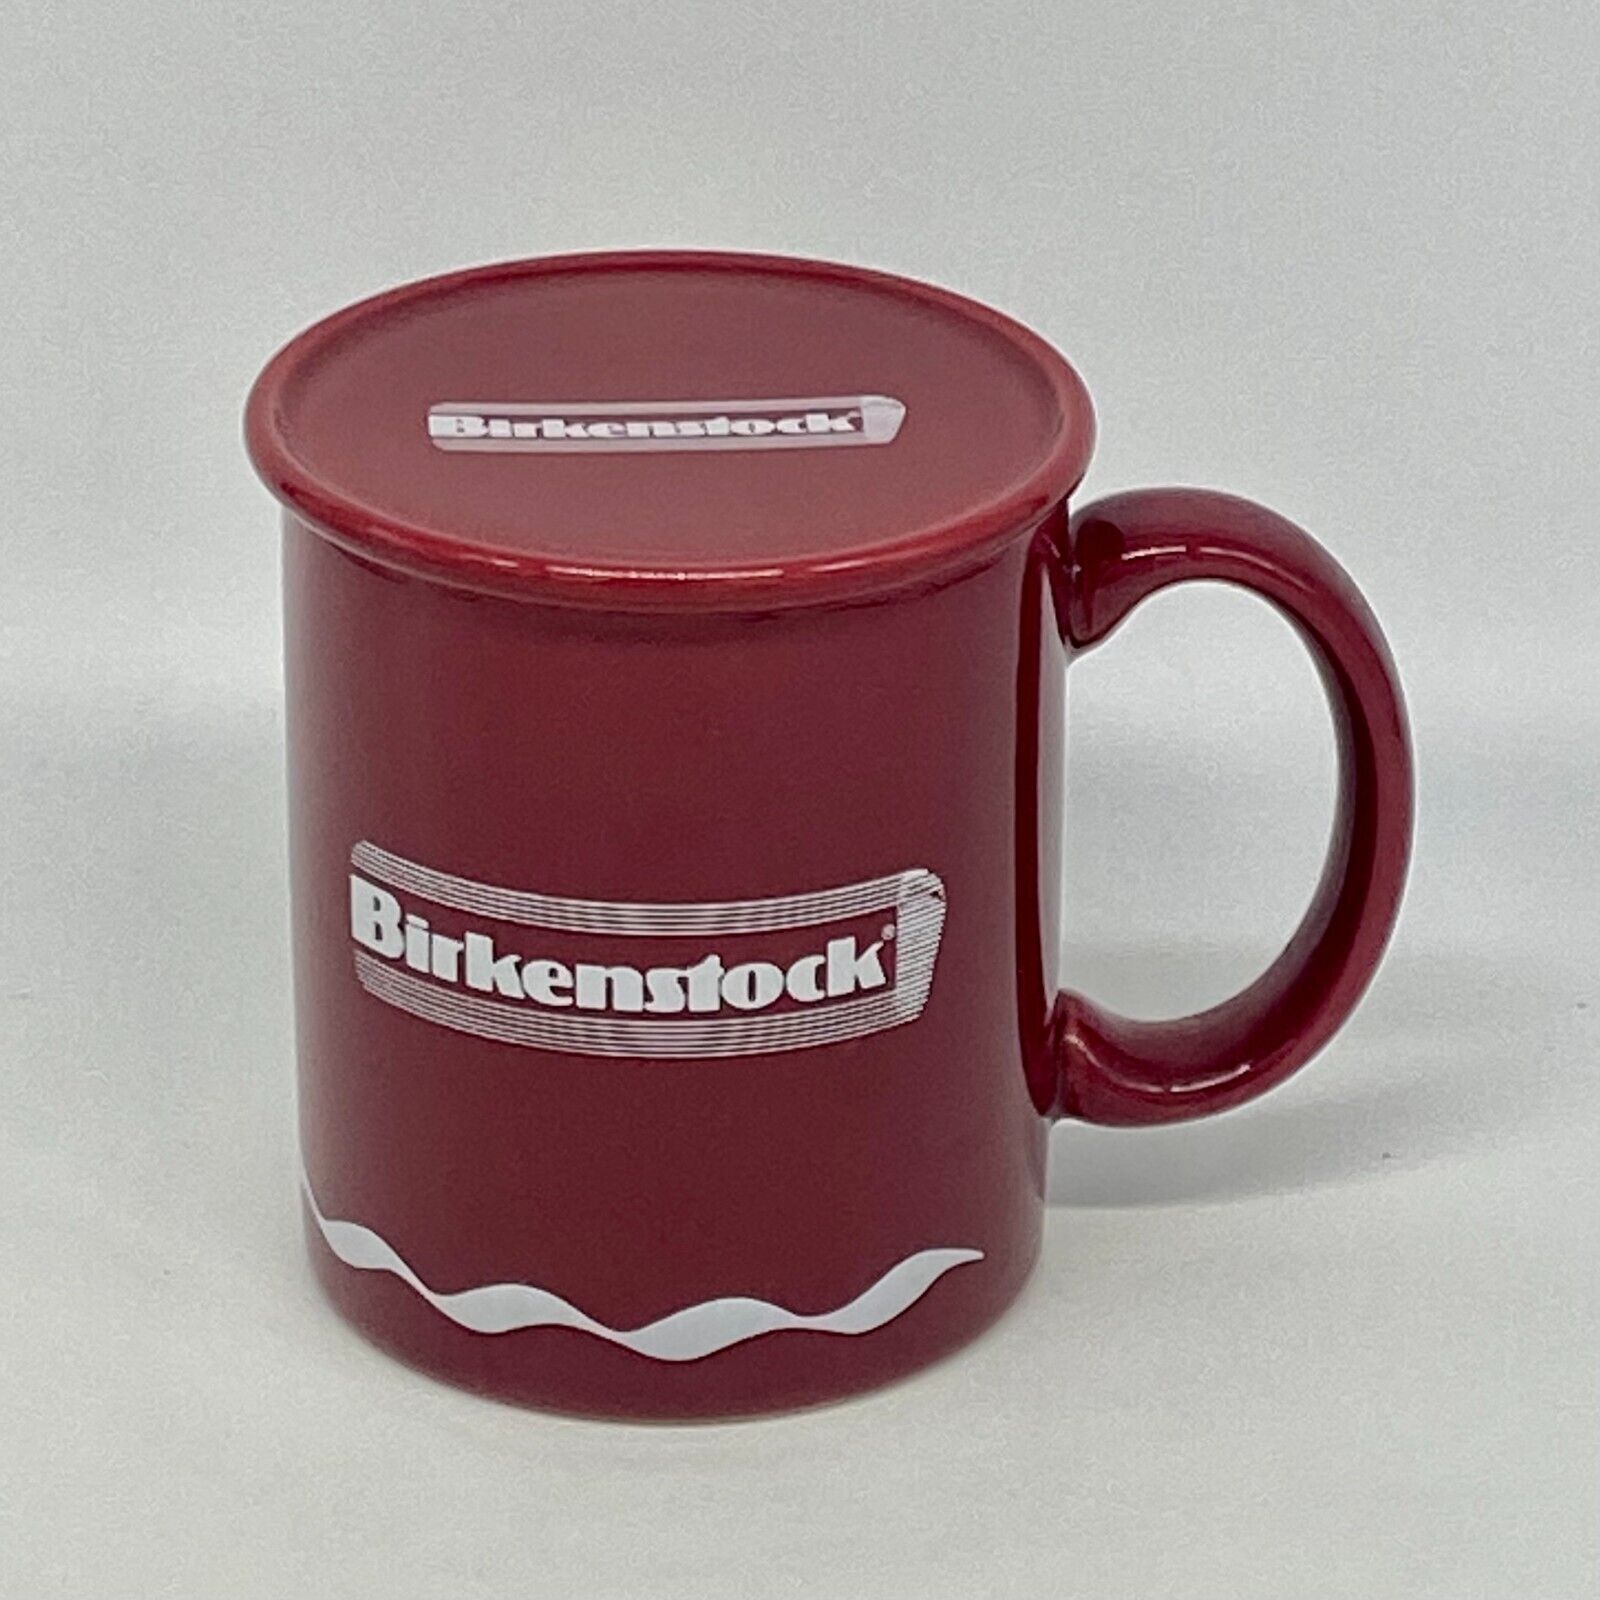 Vintage Birkenstock Coffee Mug Cup w/ Lid Coaster Advertising Retro